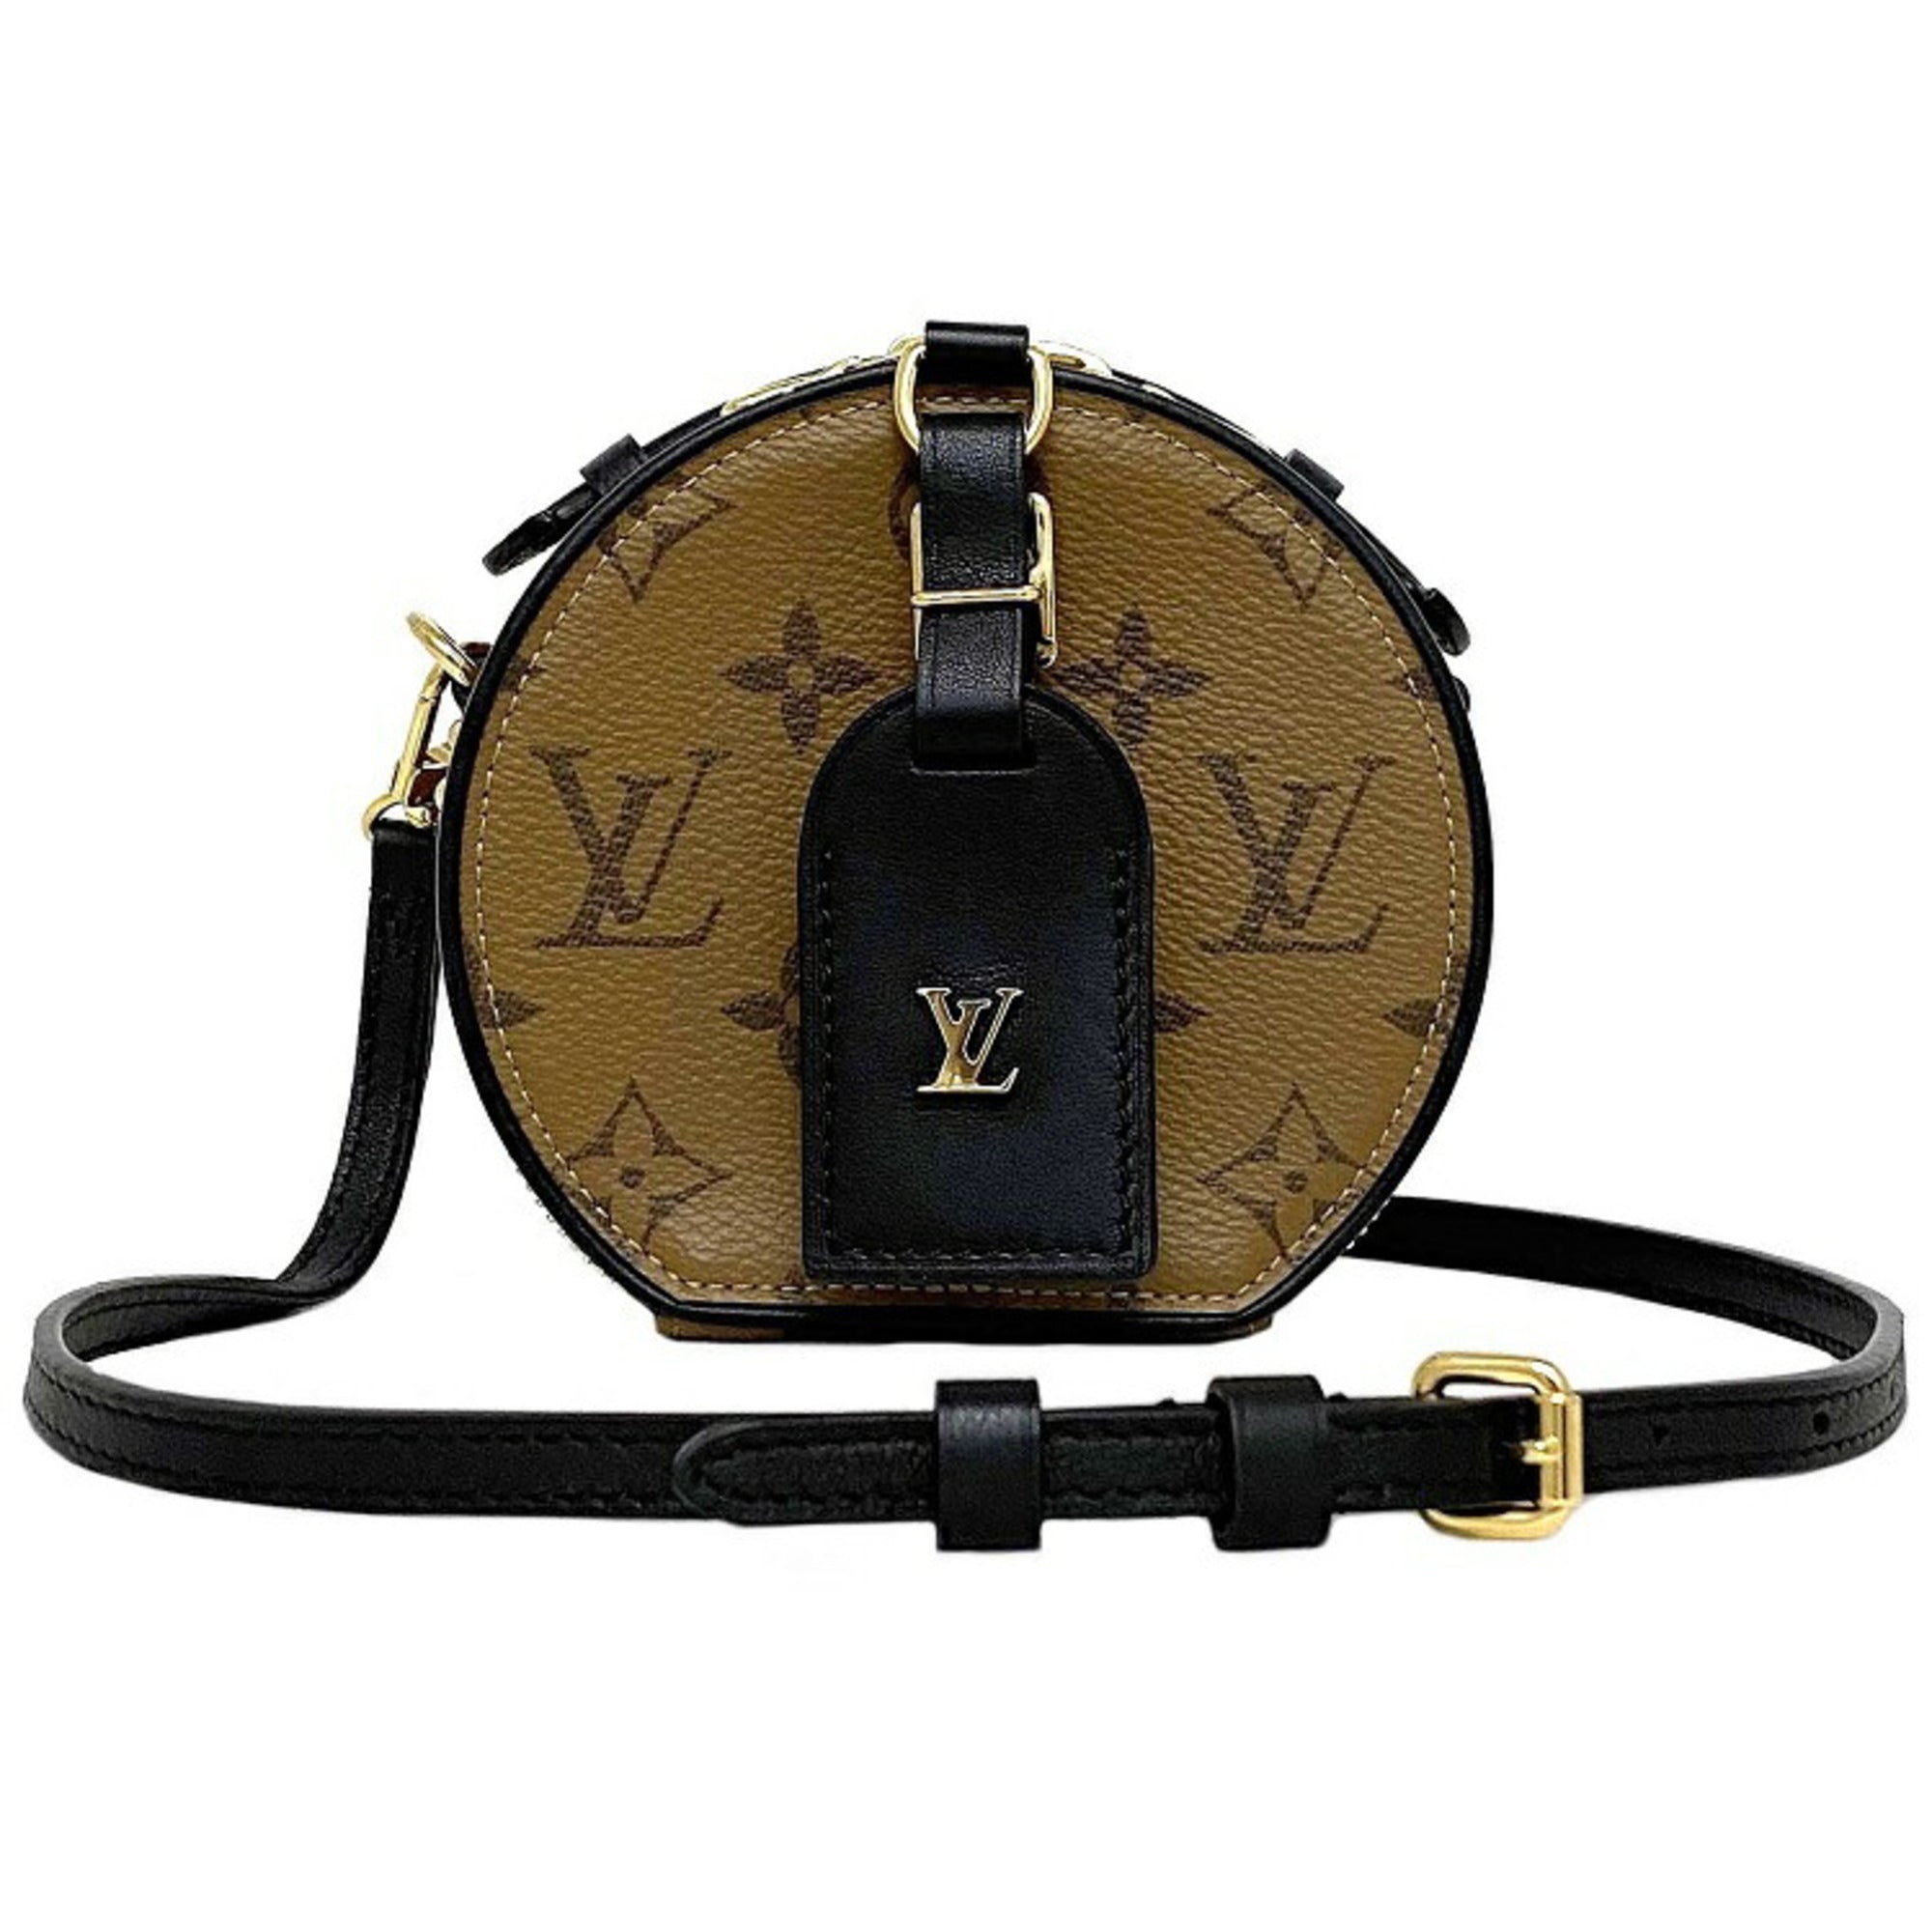 7 Louis Vuitton All Black Bags  Bragmybag  Louis vuitton handbags  Handbags michael kors Bags